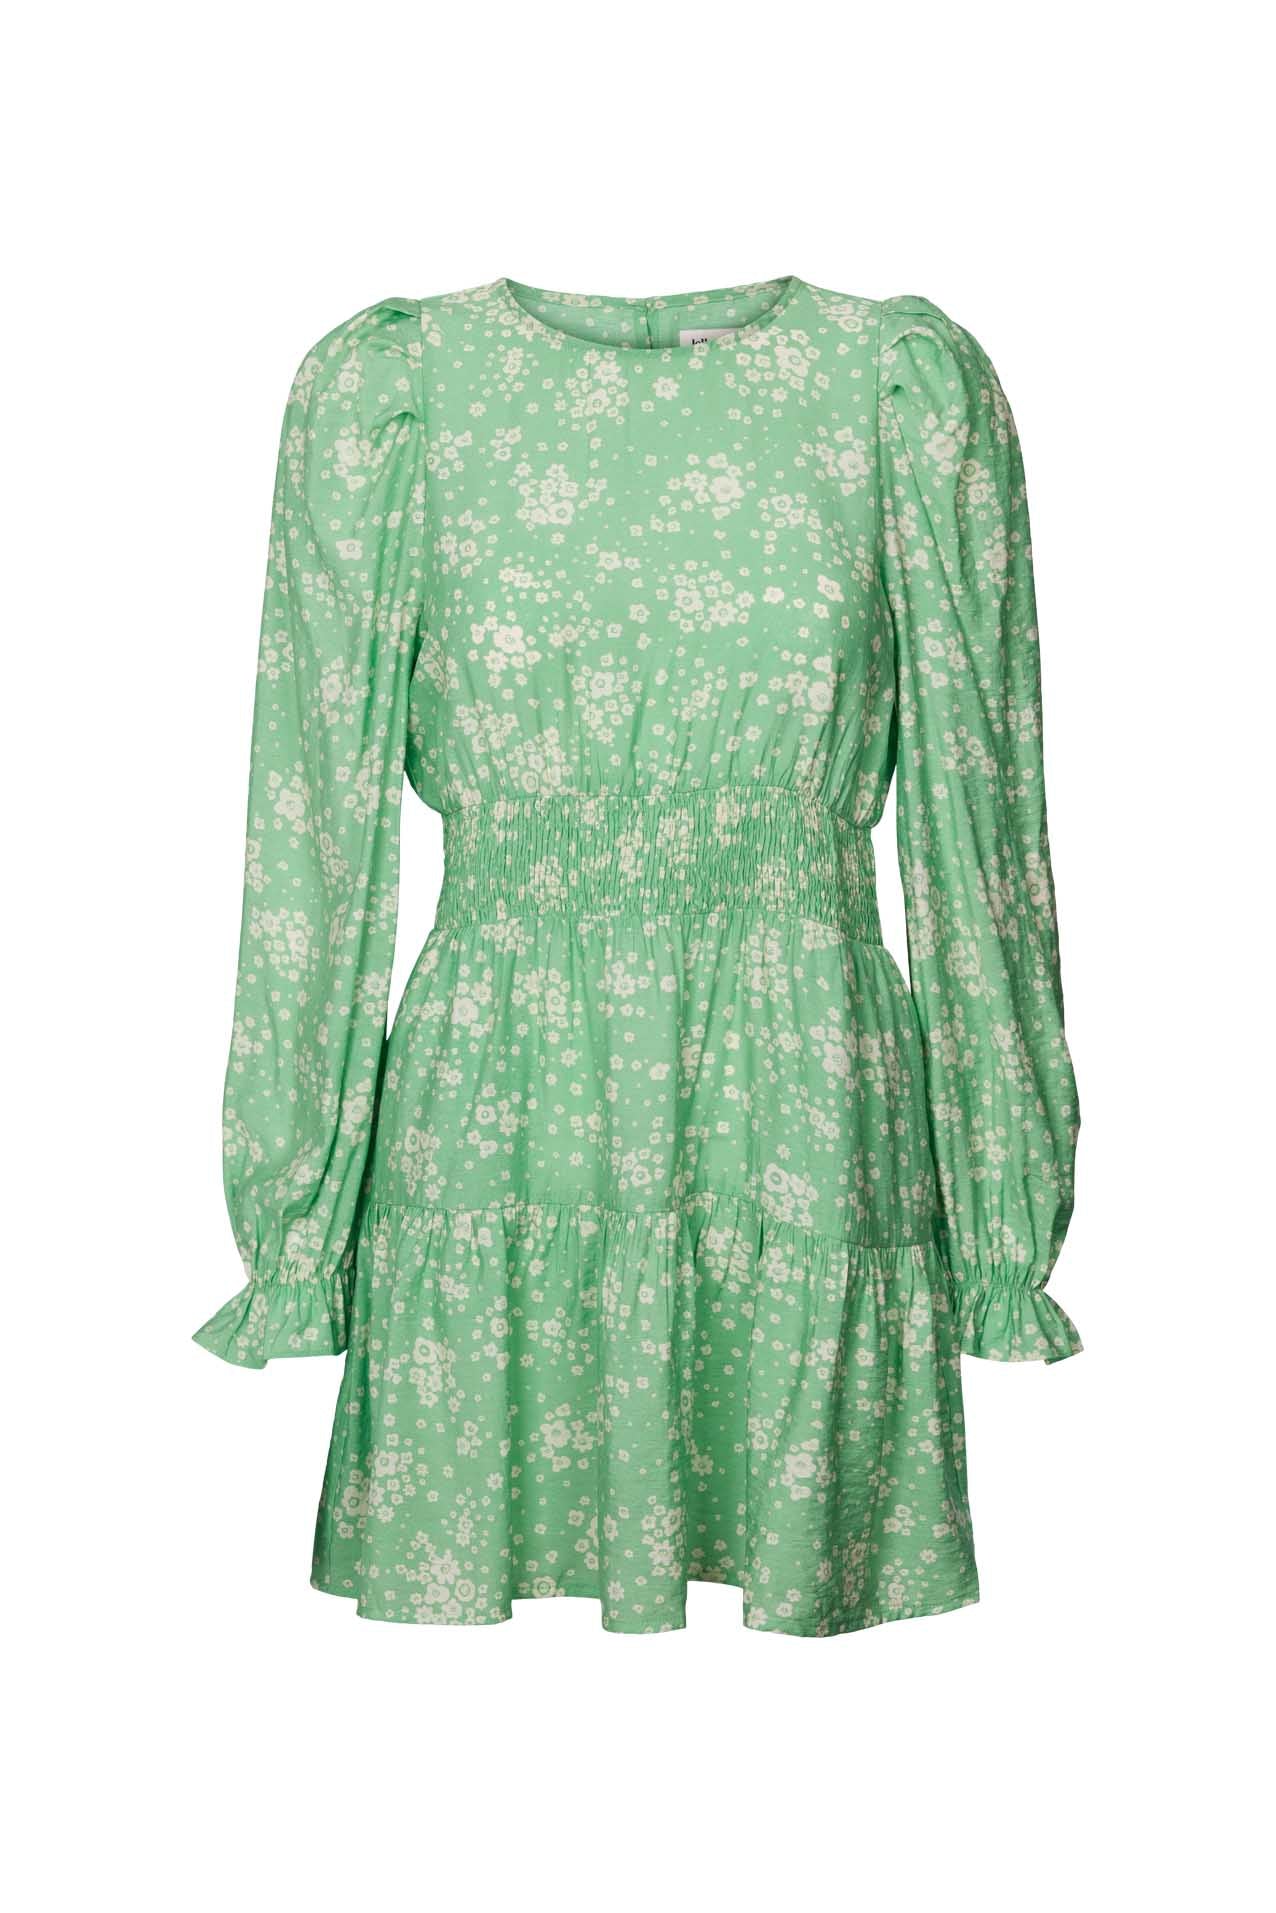 Lollys Laundry Parina Dress Dress 40 Green